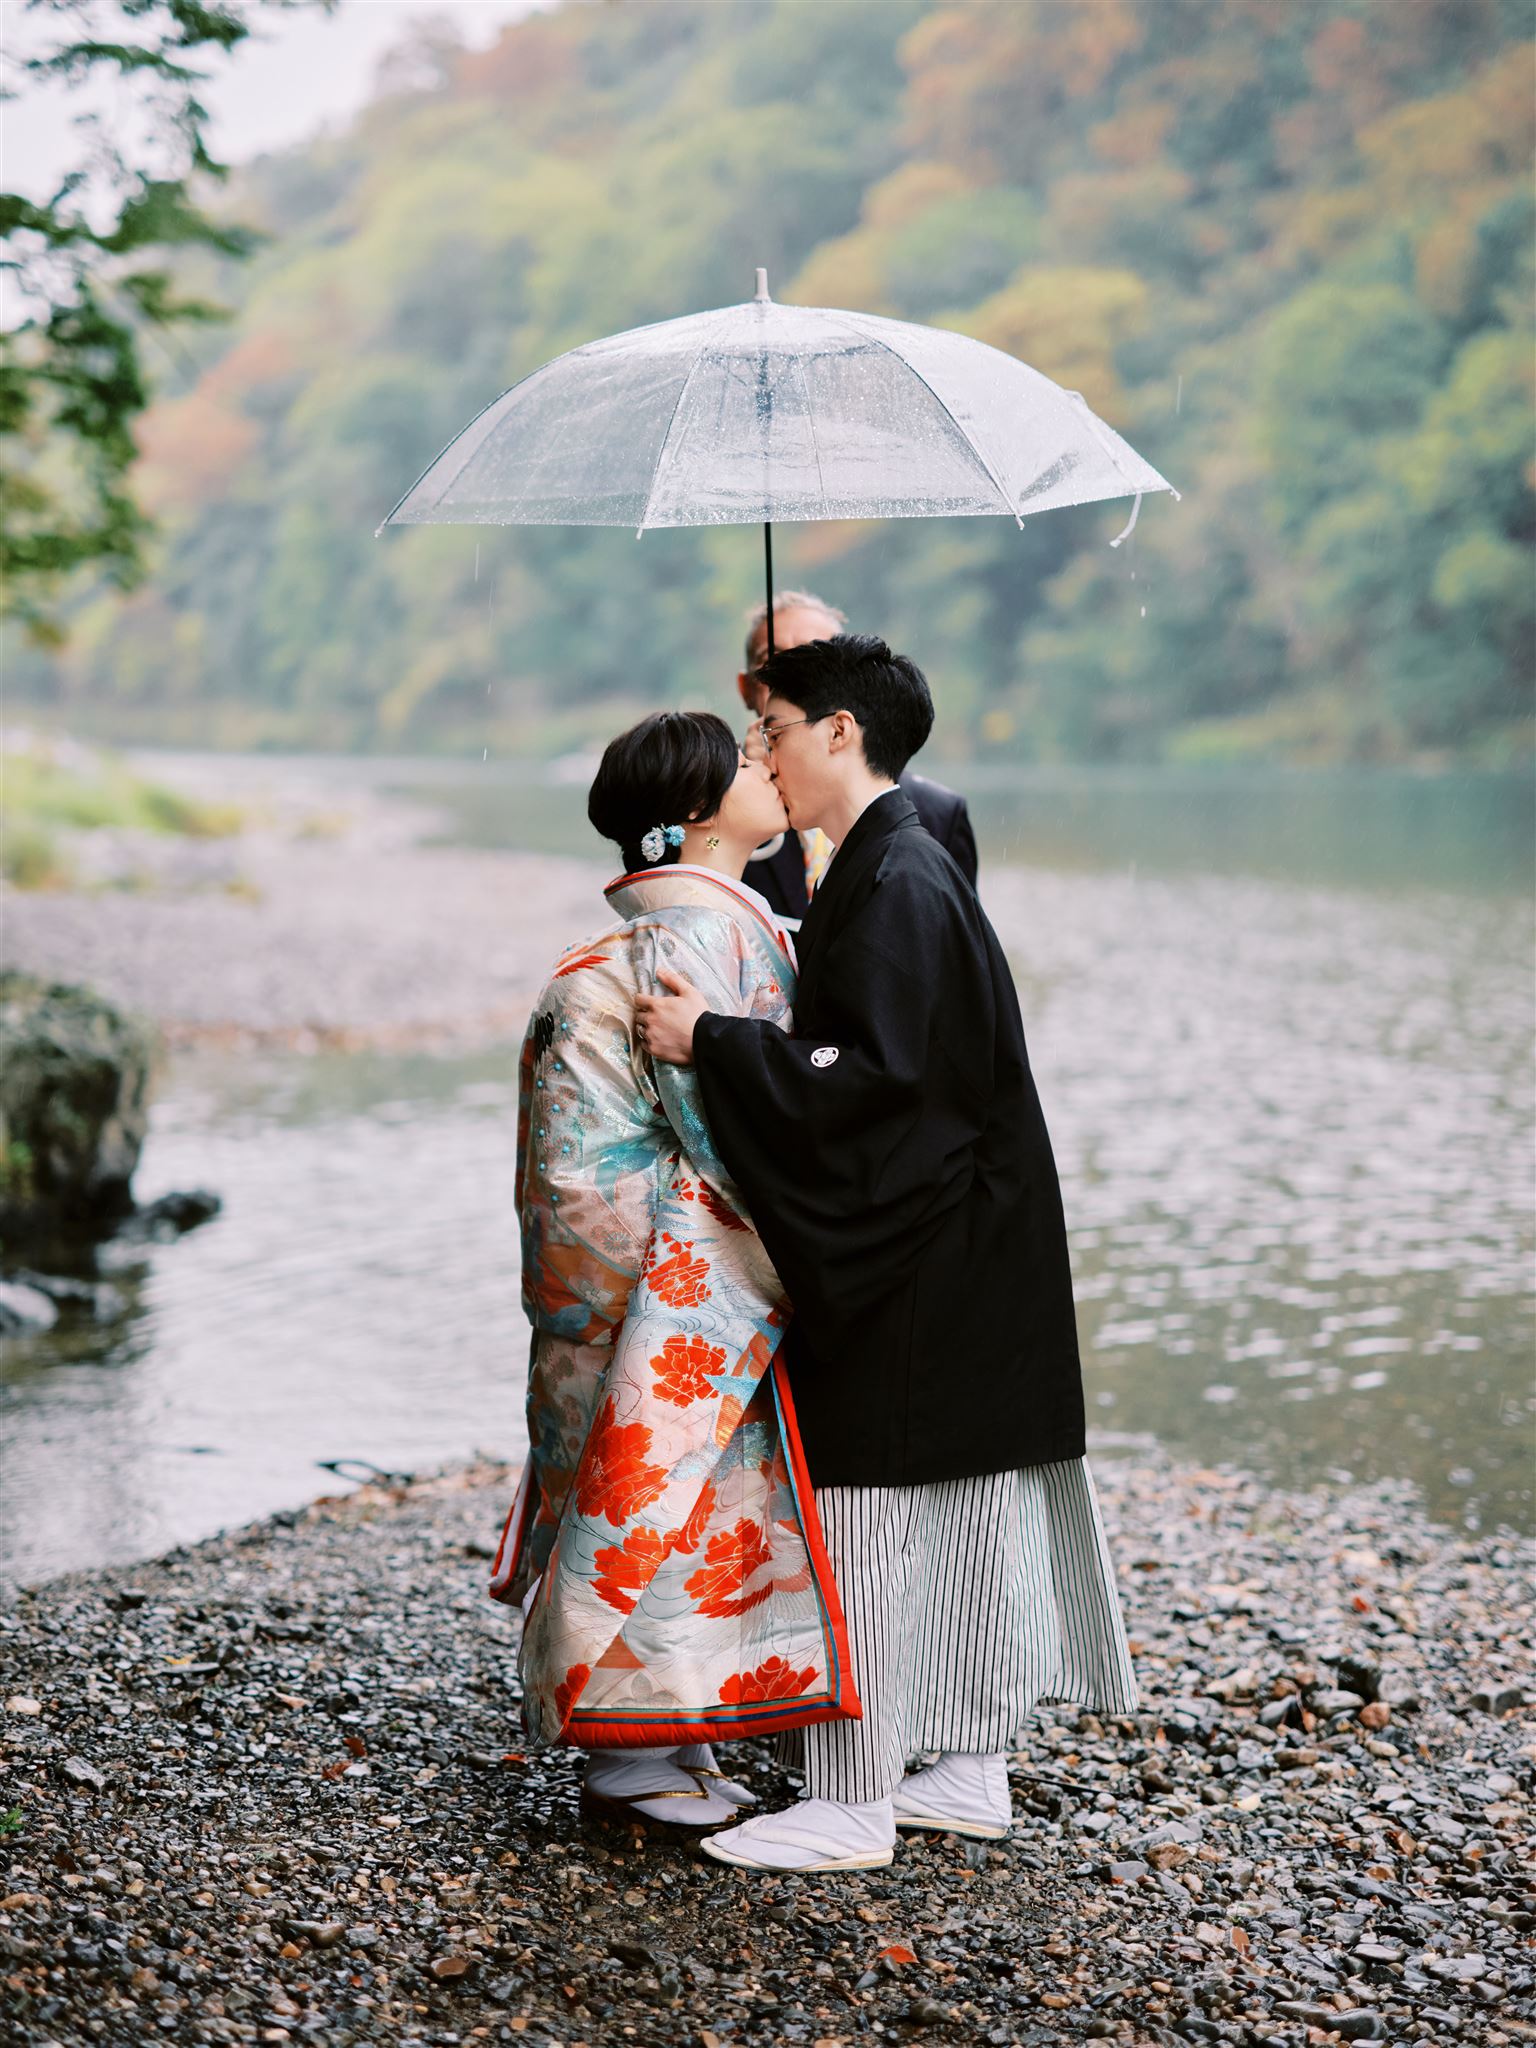 Kyoto Tokyo Japan Elopement Wedding Photographer, Planner & Videographer | Elopement Photographer capturing a romantic couple kissing under an umbrella near a picturesque river.